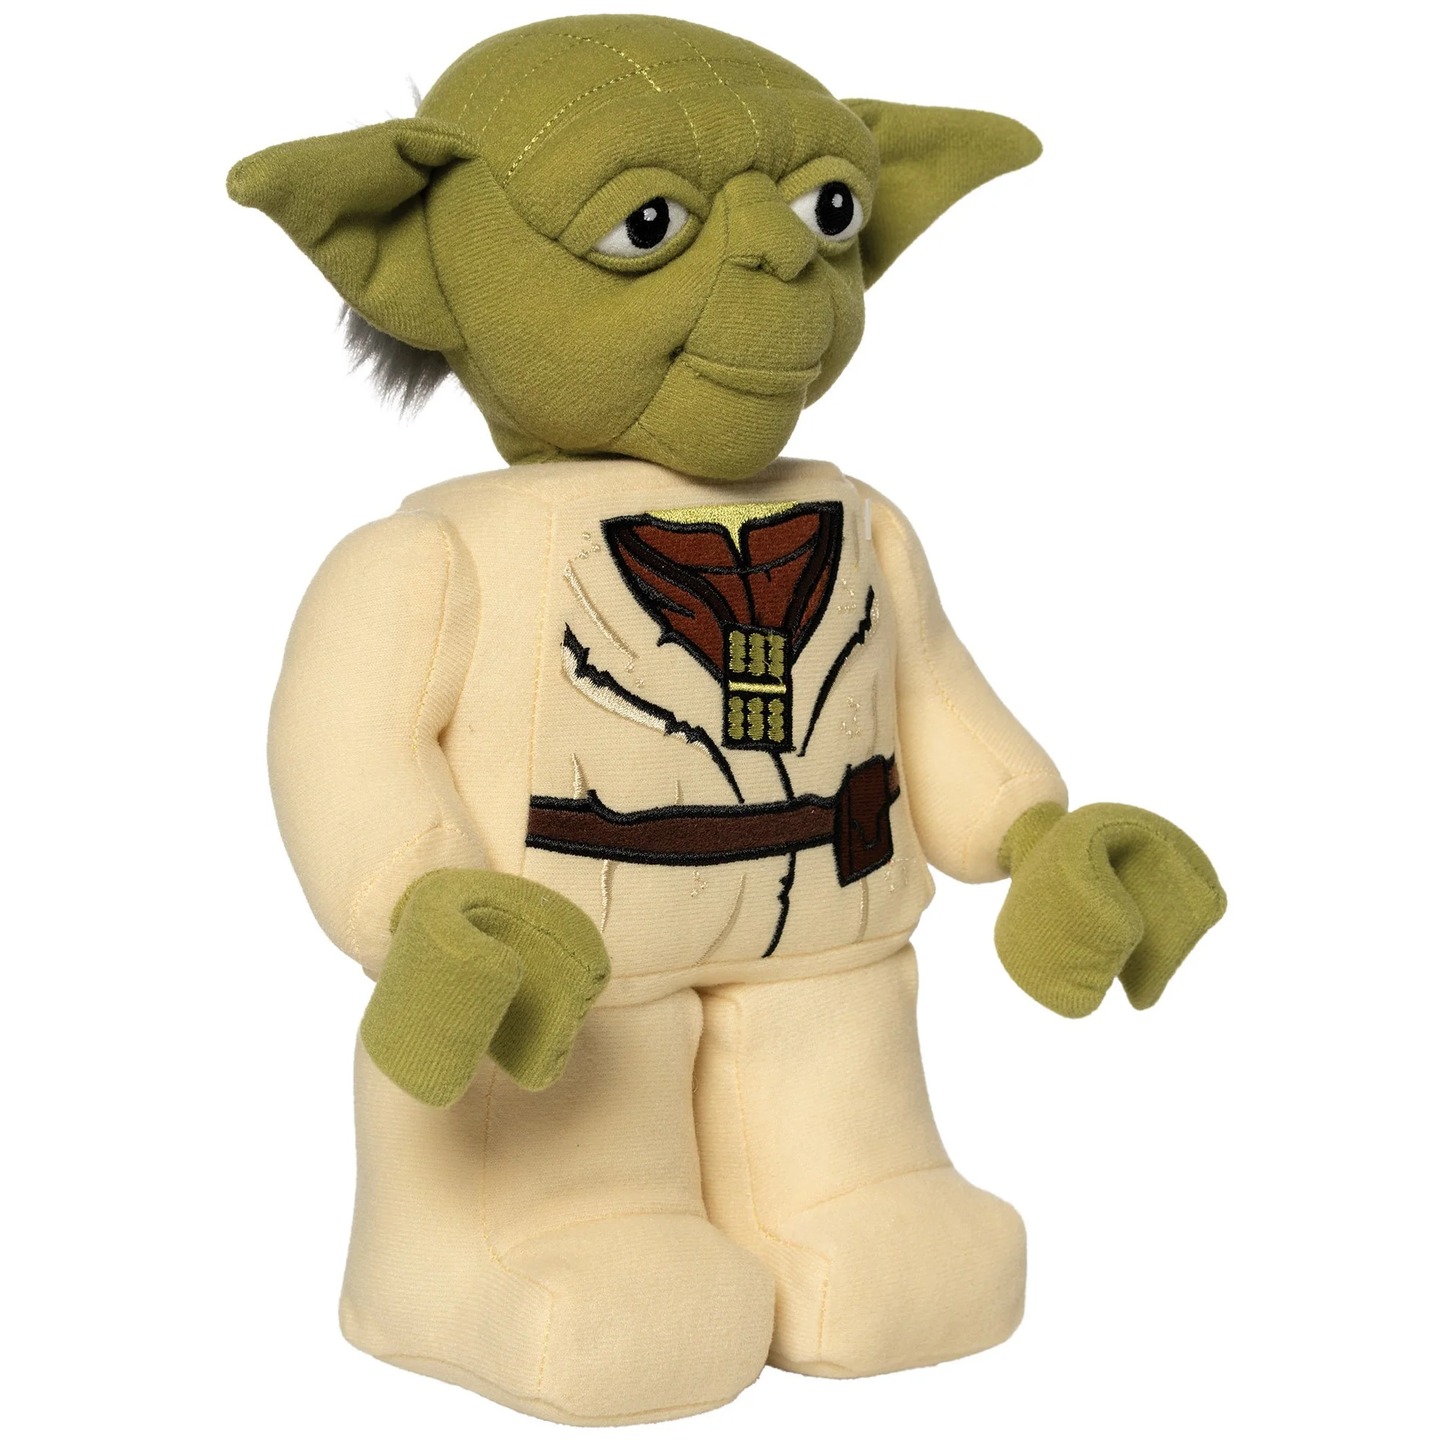 Lego Star Wars Yoda Stuffed Animal